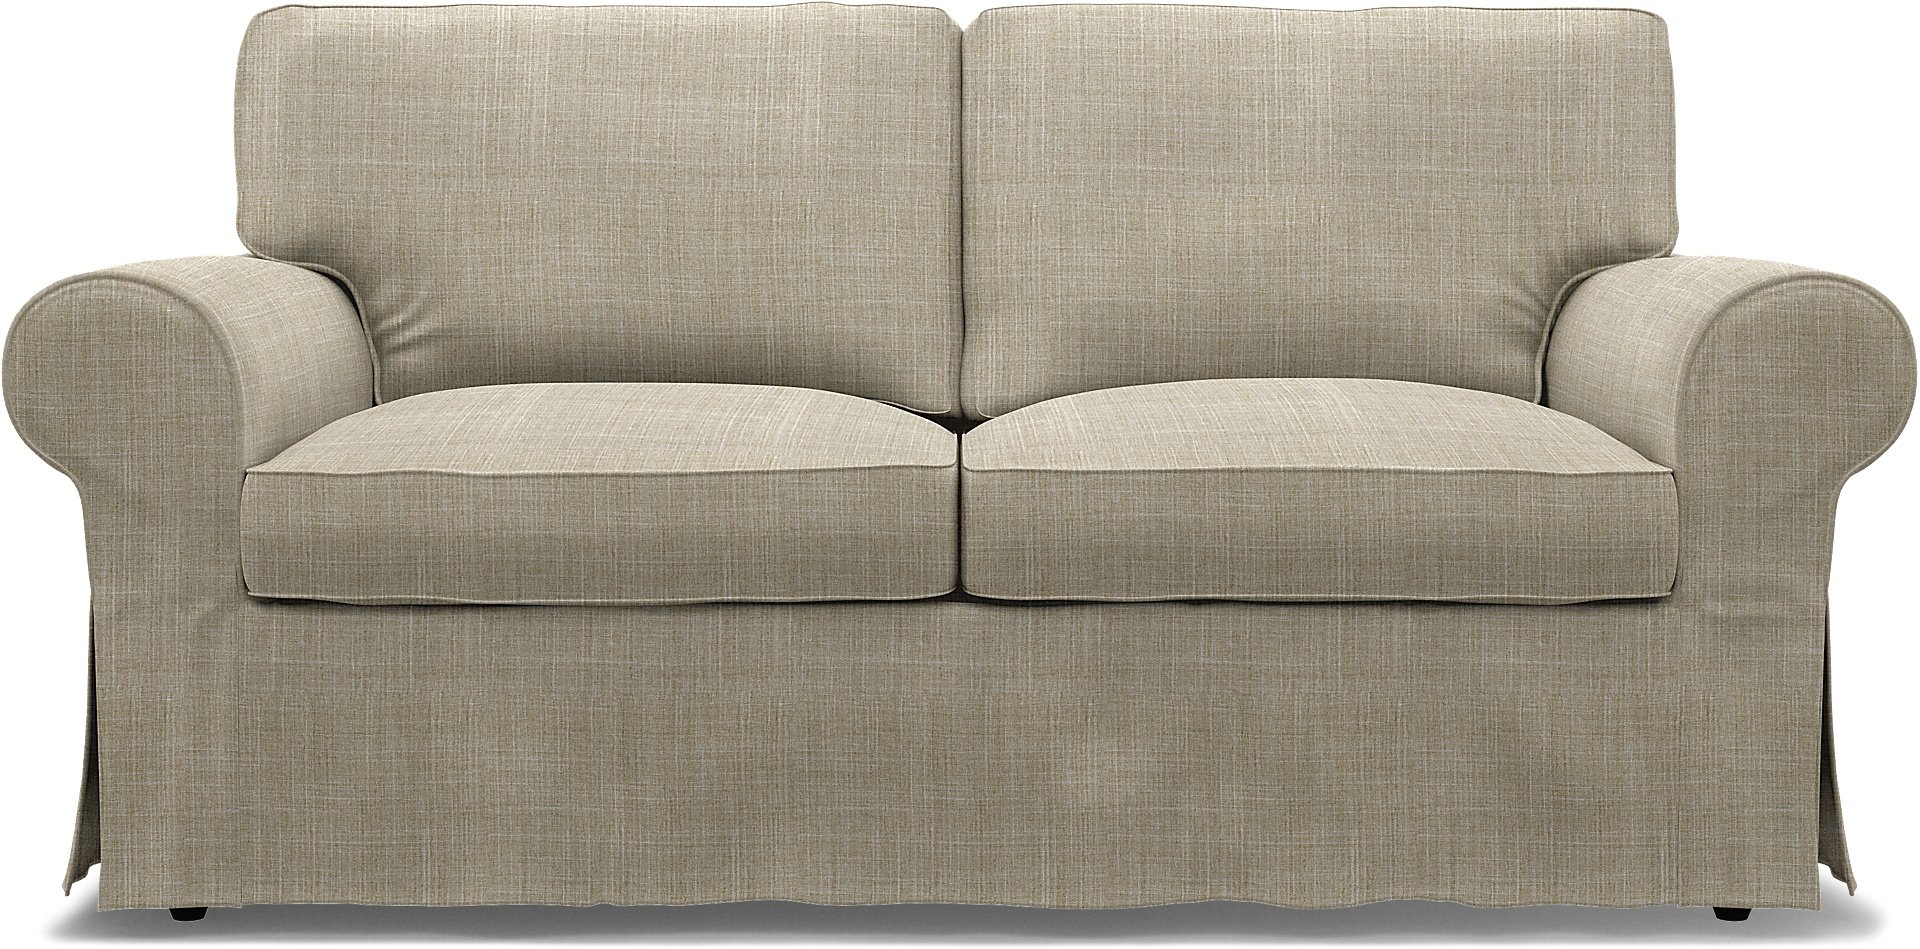 IKEA - Ektorp 2 Seater Sofa Bed Cover, Sand Beige, Boucle & Texture - Bemz